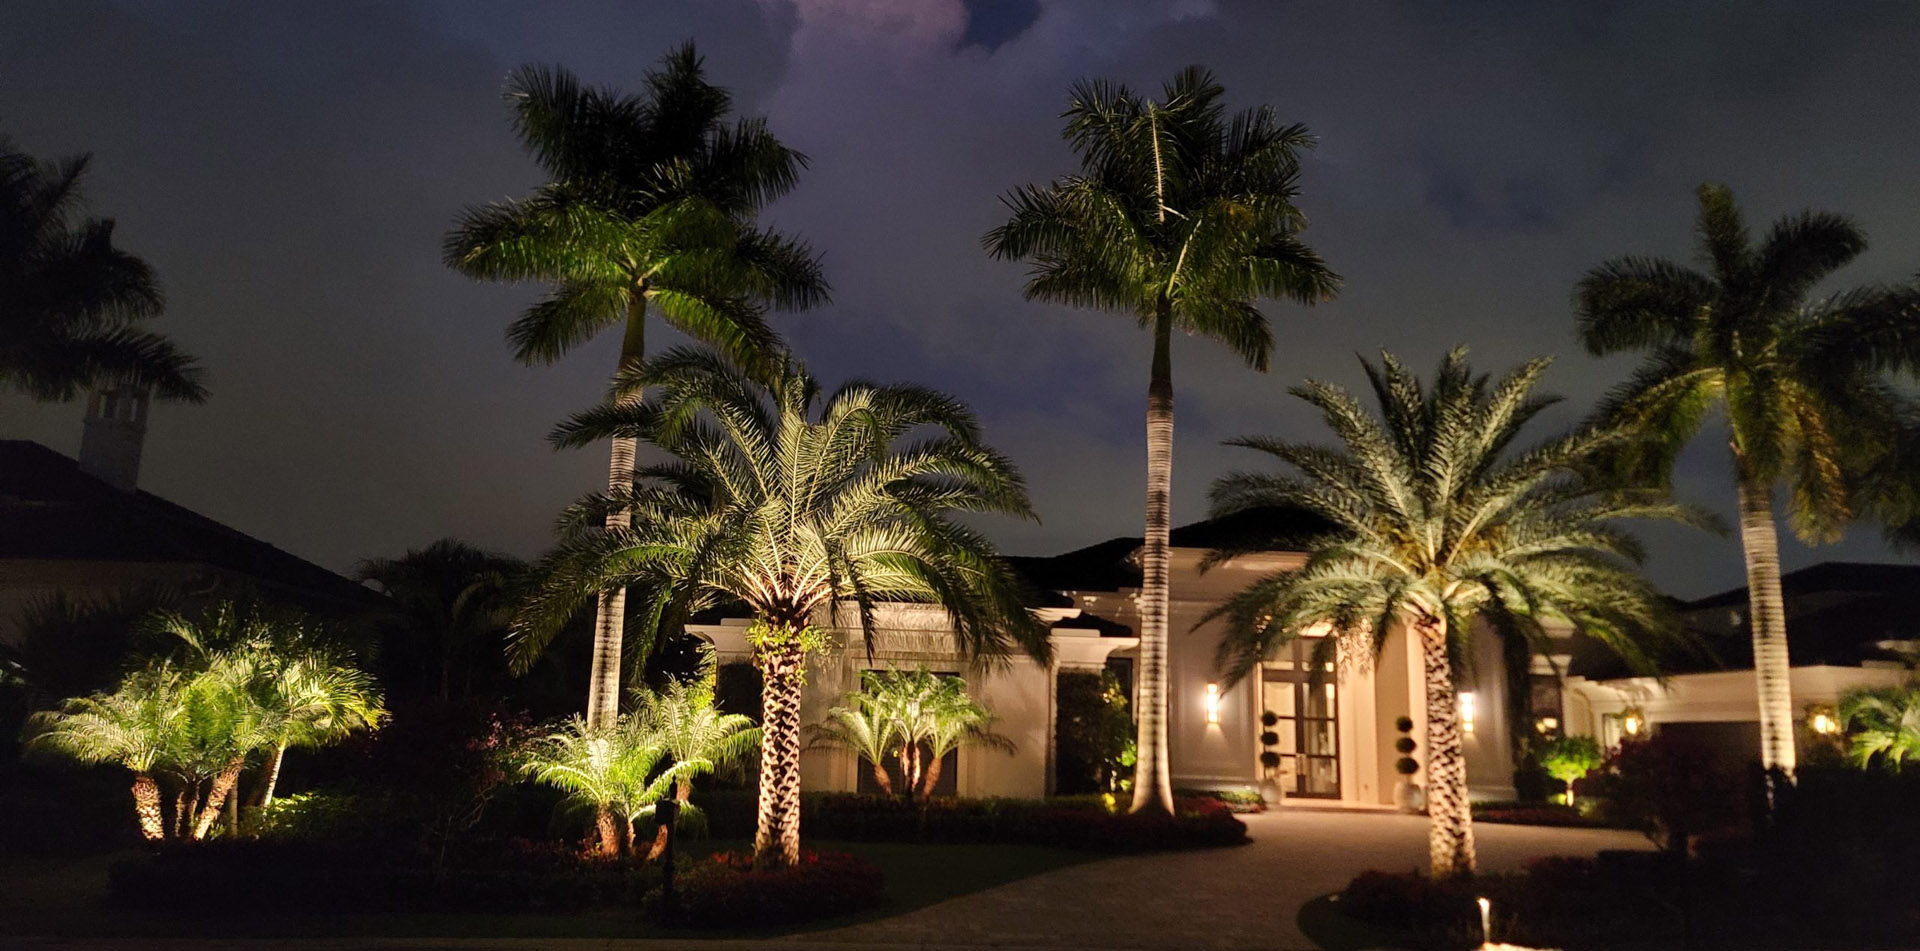 Up Lighting Plants and Palms